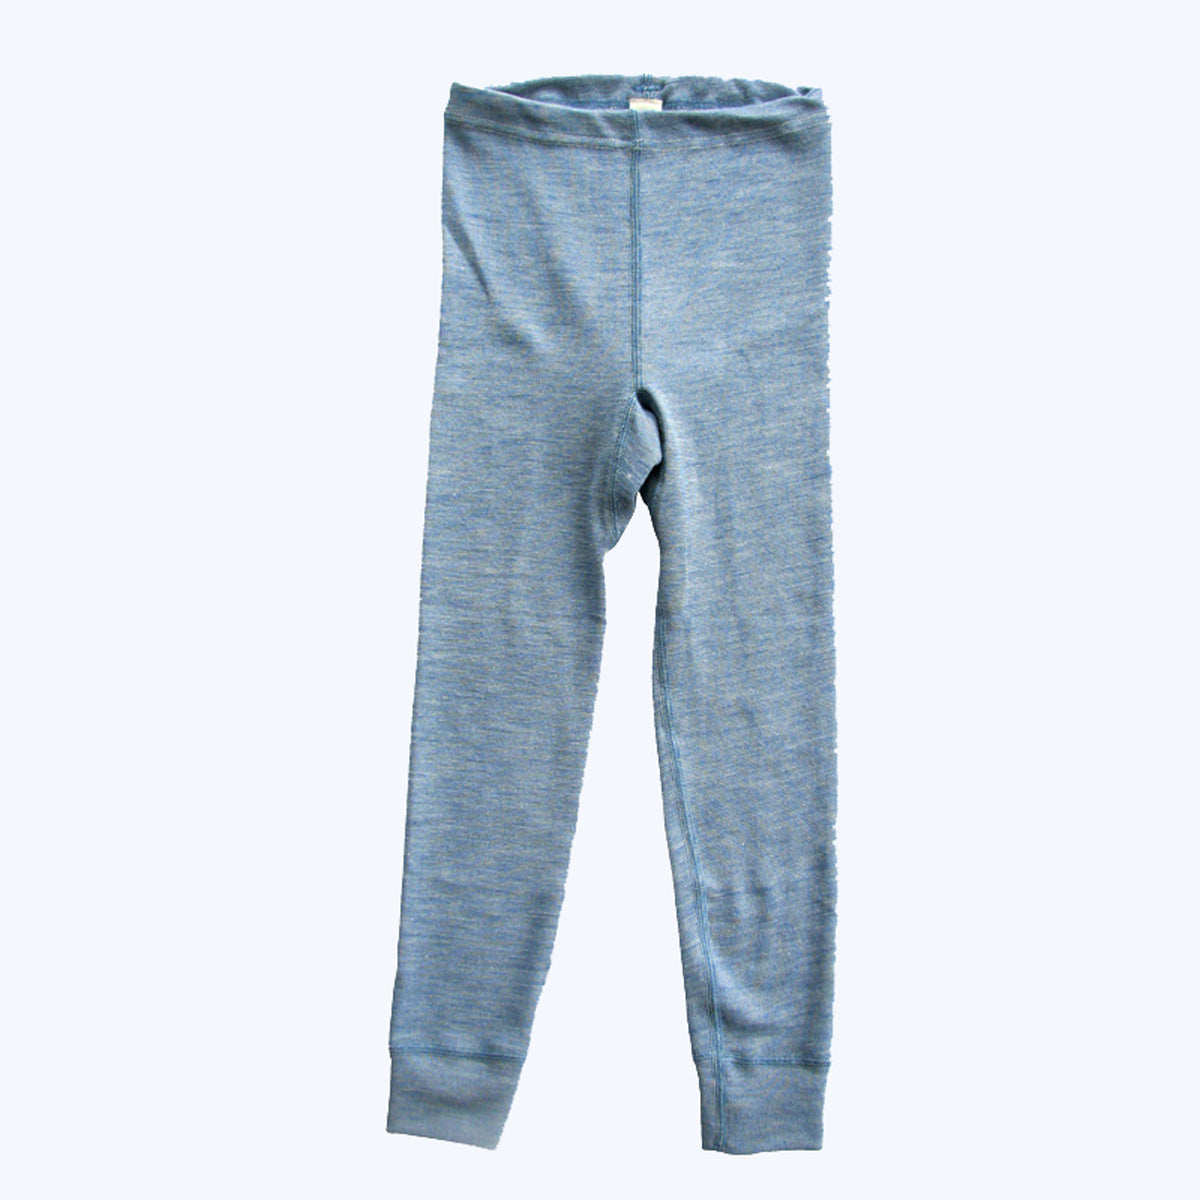 Hocosa Men's Long Underwear Pants in Organic Wool – Danish Woolen Delight